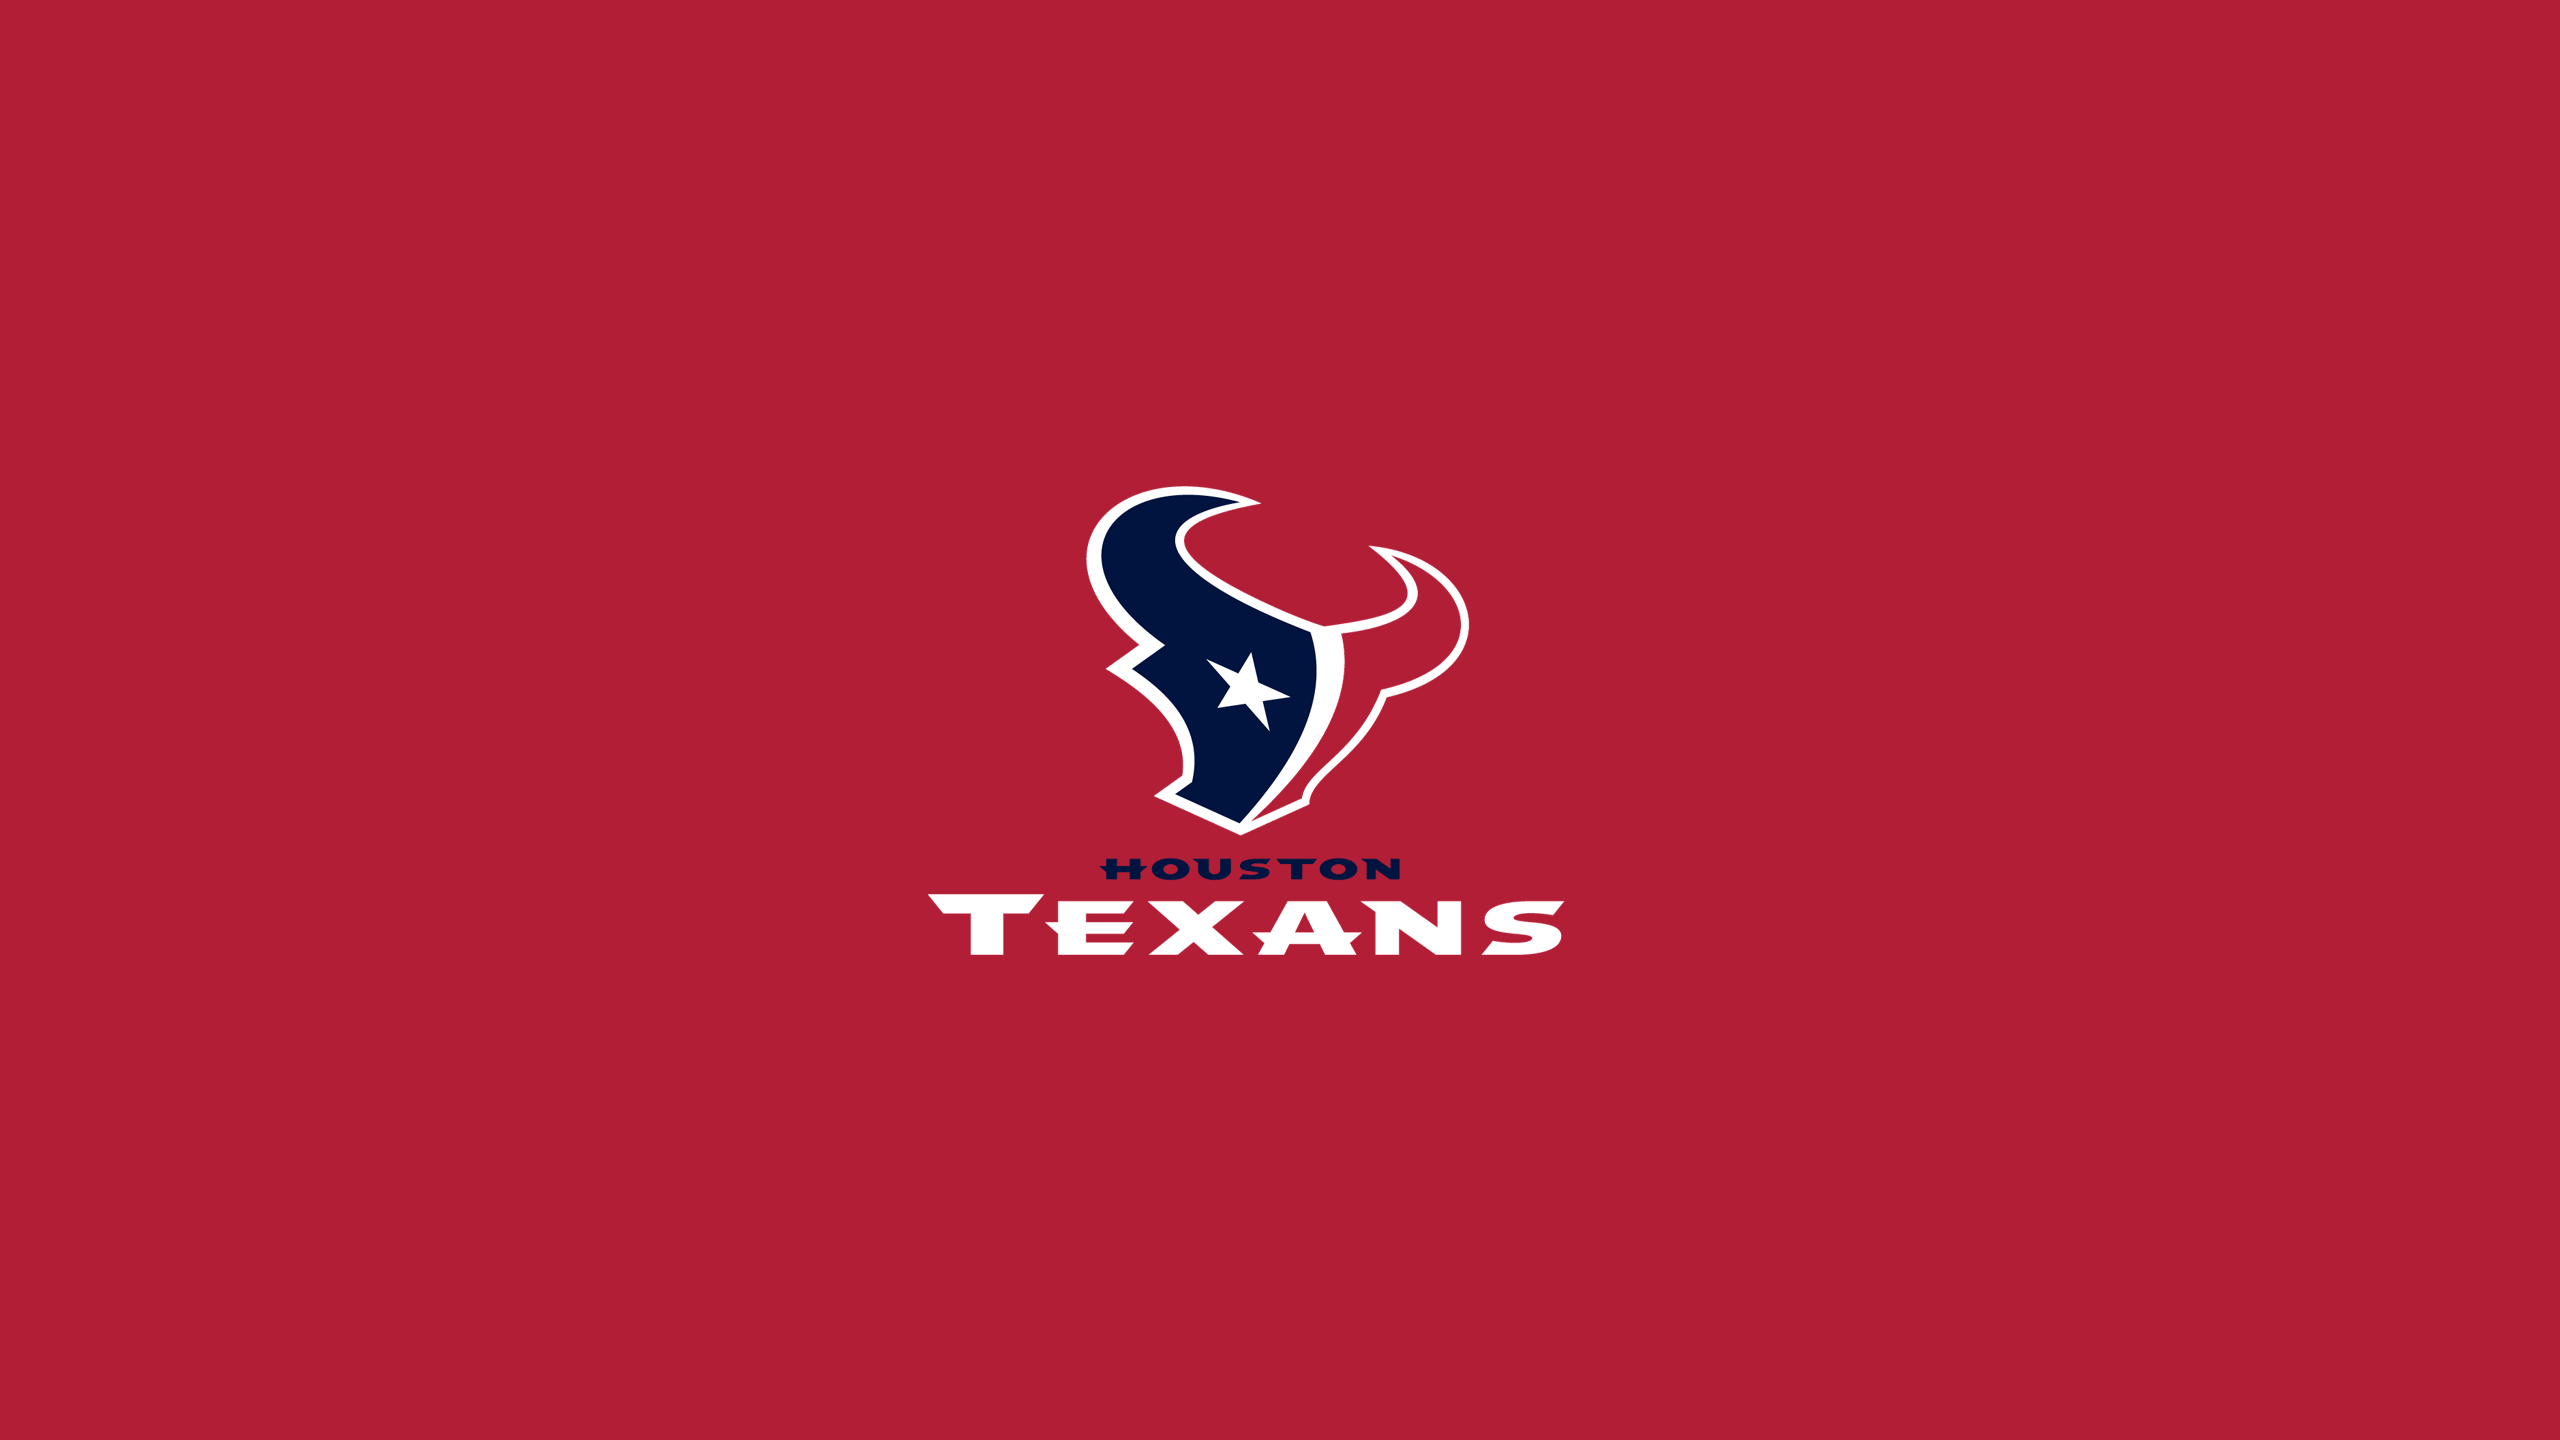 Houston Texans - NFL - Square Bettor